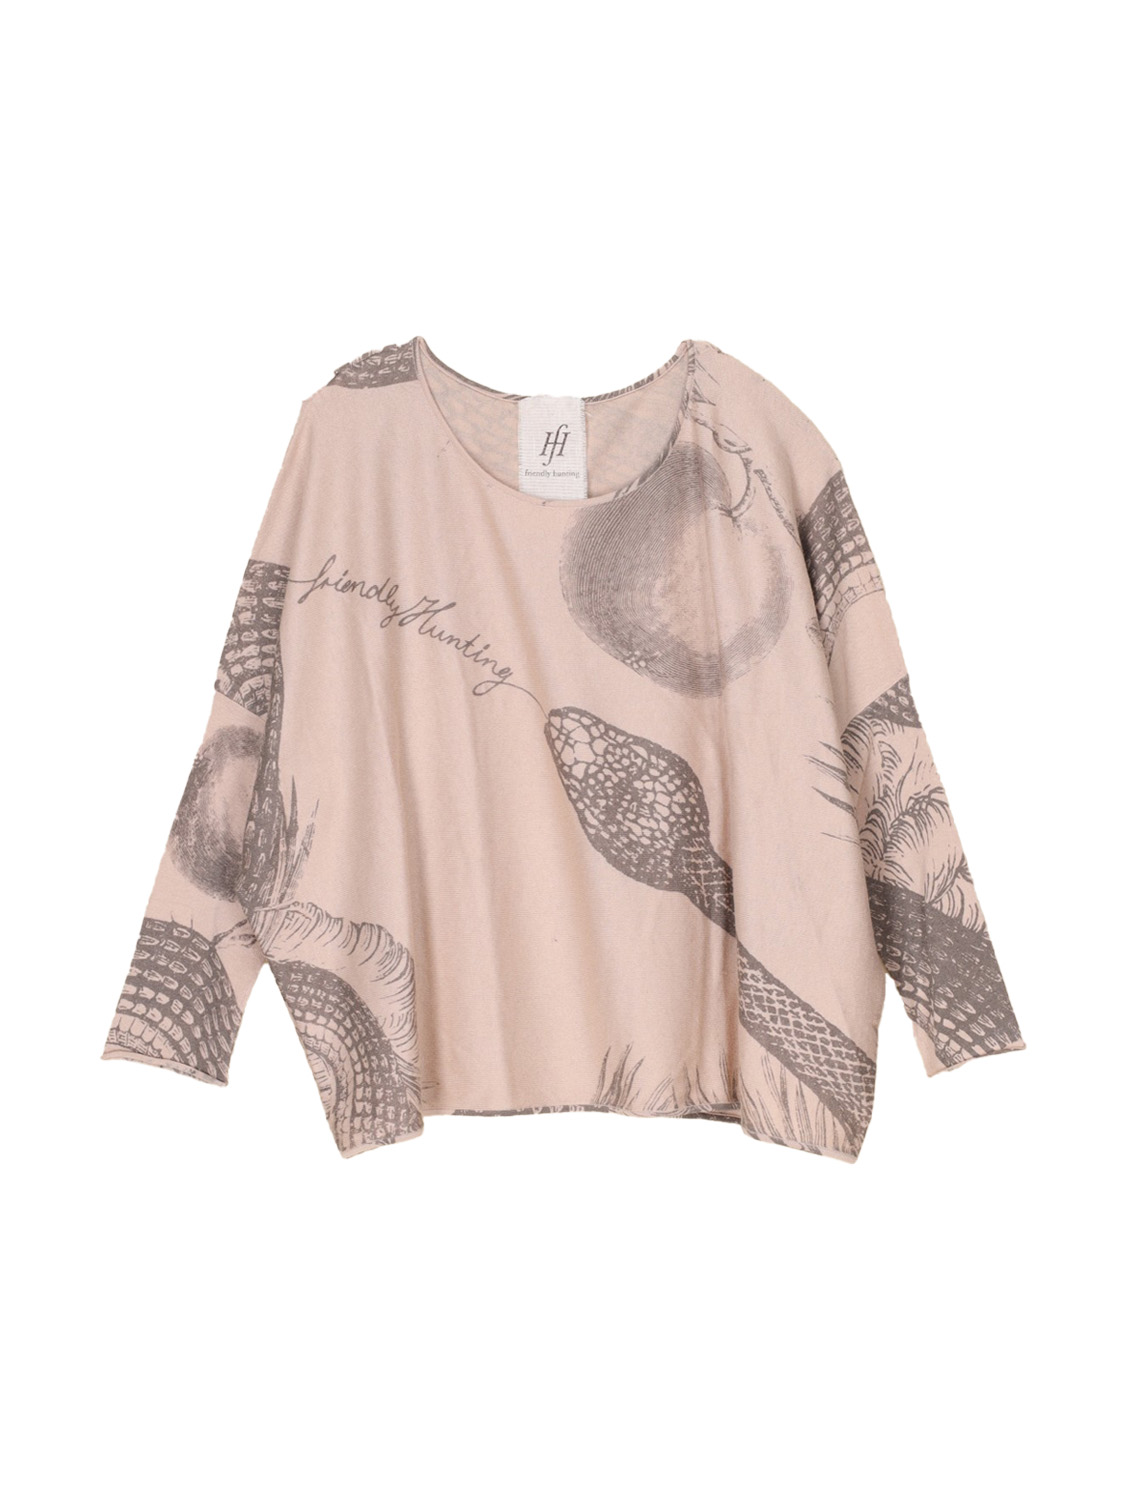 Imara Brighton - Lightweight sweater made from a cotton-cashmere blend 